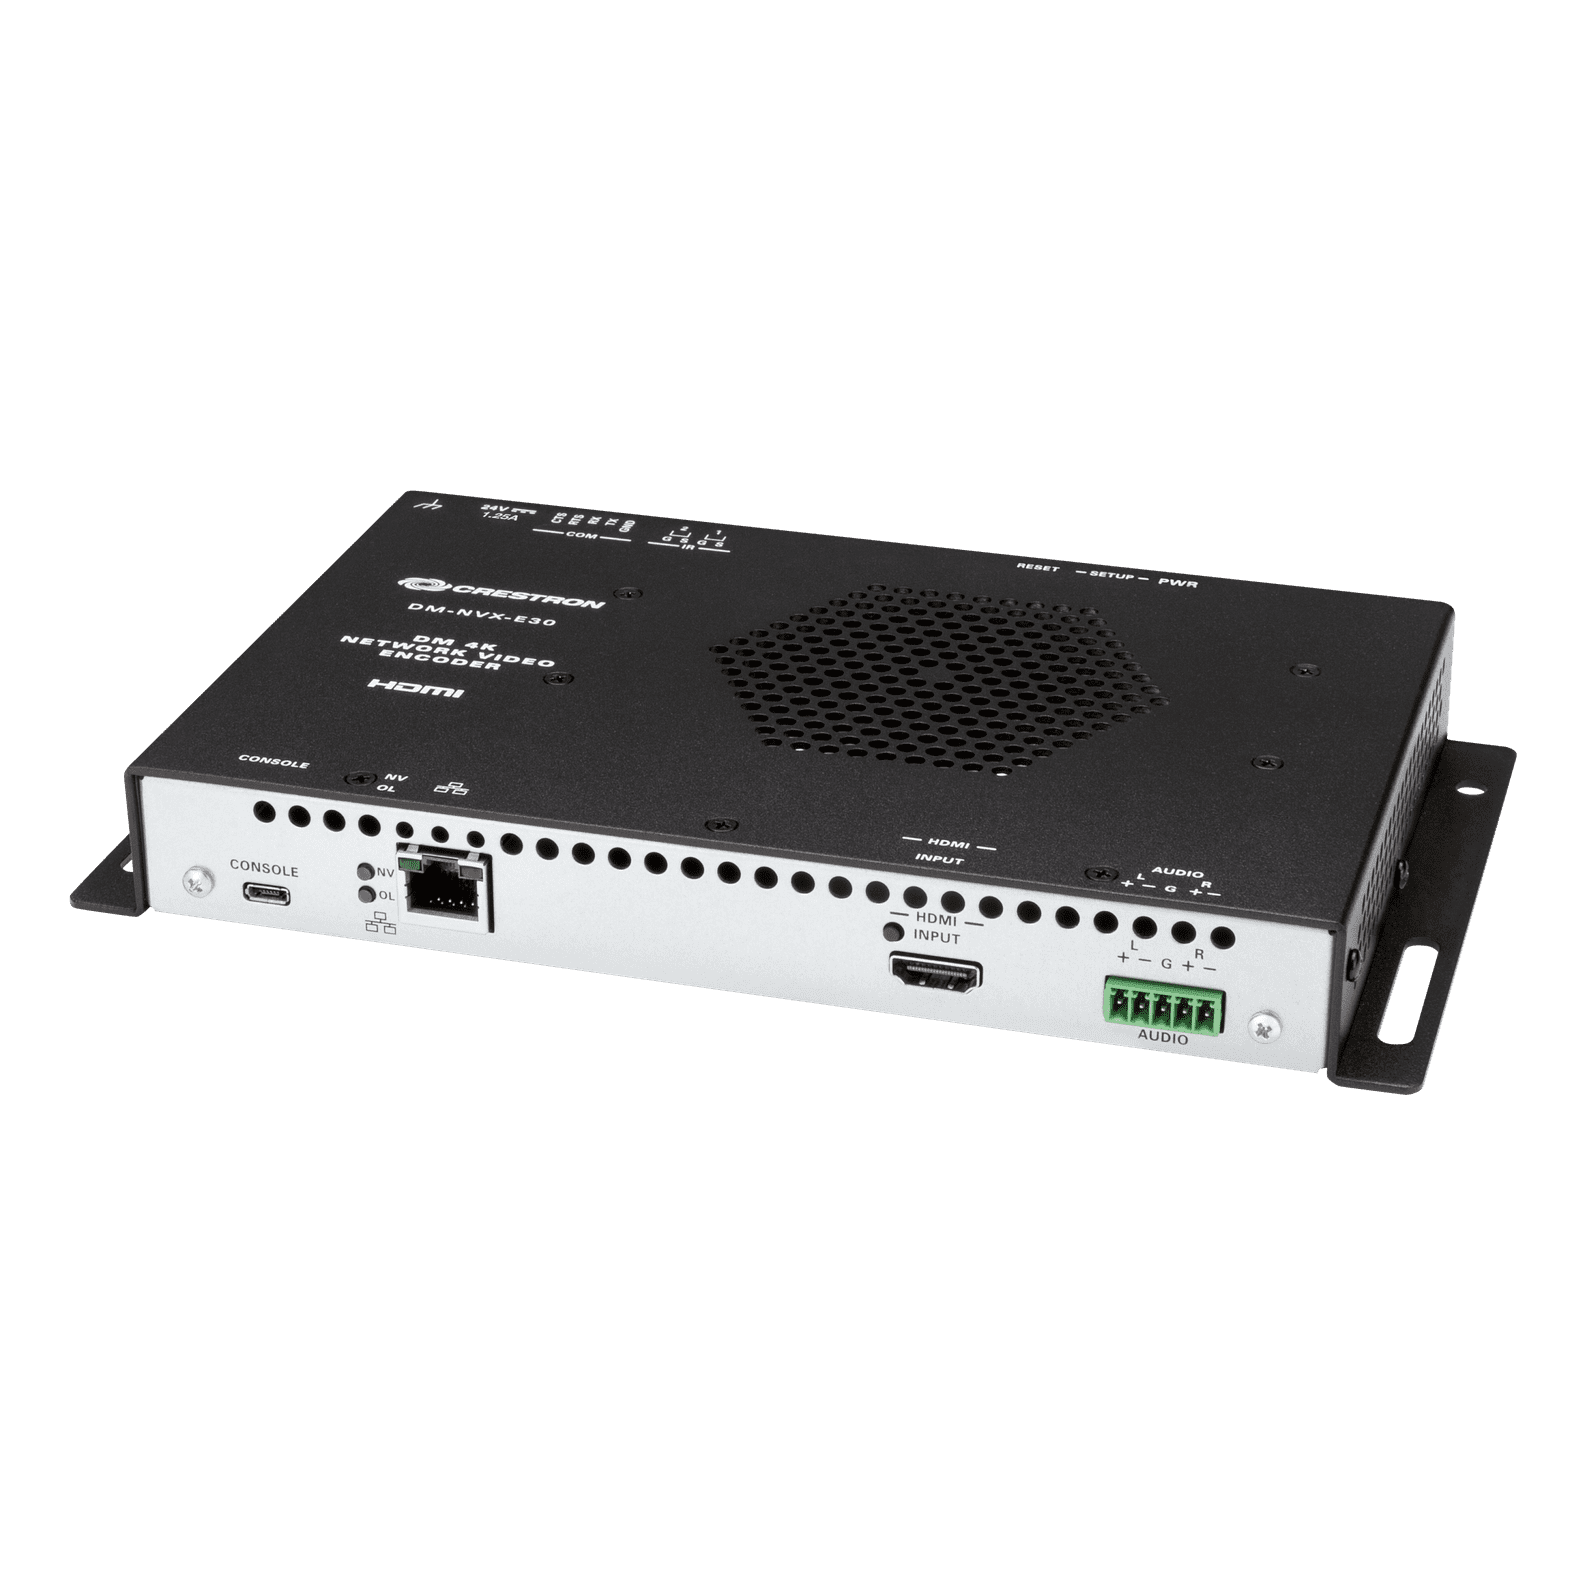 Get Crestron DM NVX® 4K60 4:4:4 HDR Network AV Encoder from Malaysia Distributor - vnetwork